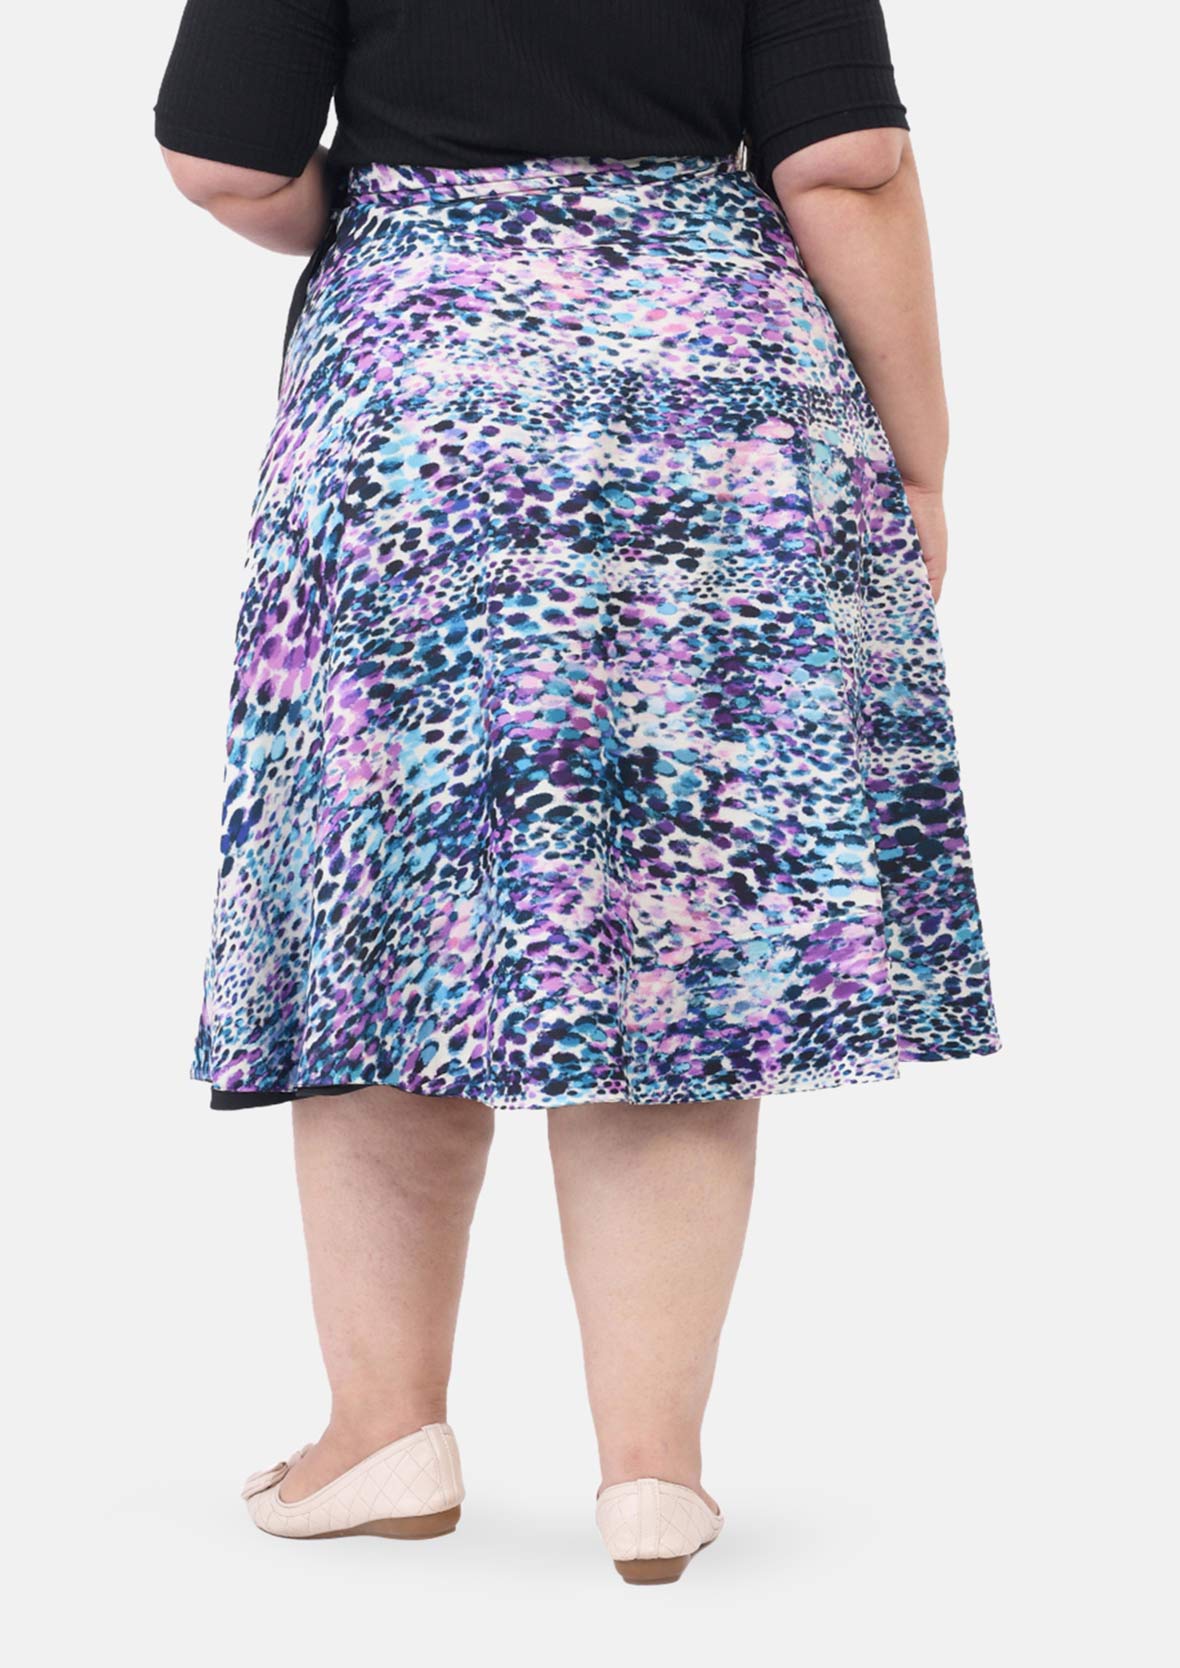 Floral Jungle Print Reversible Skirt